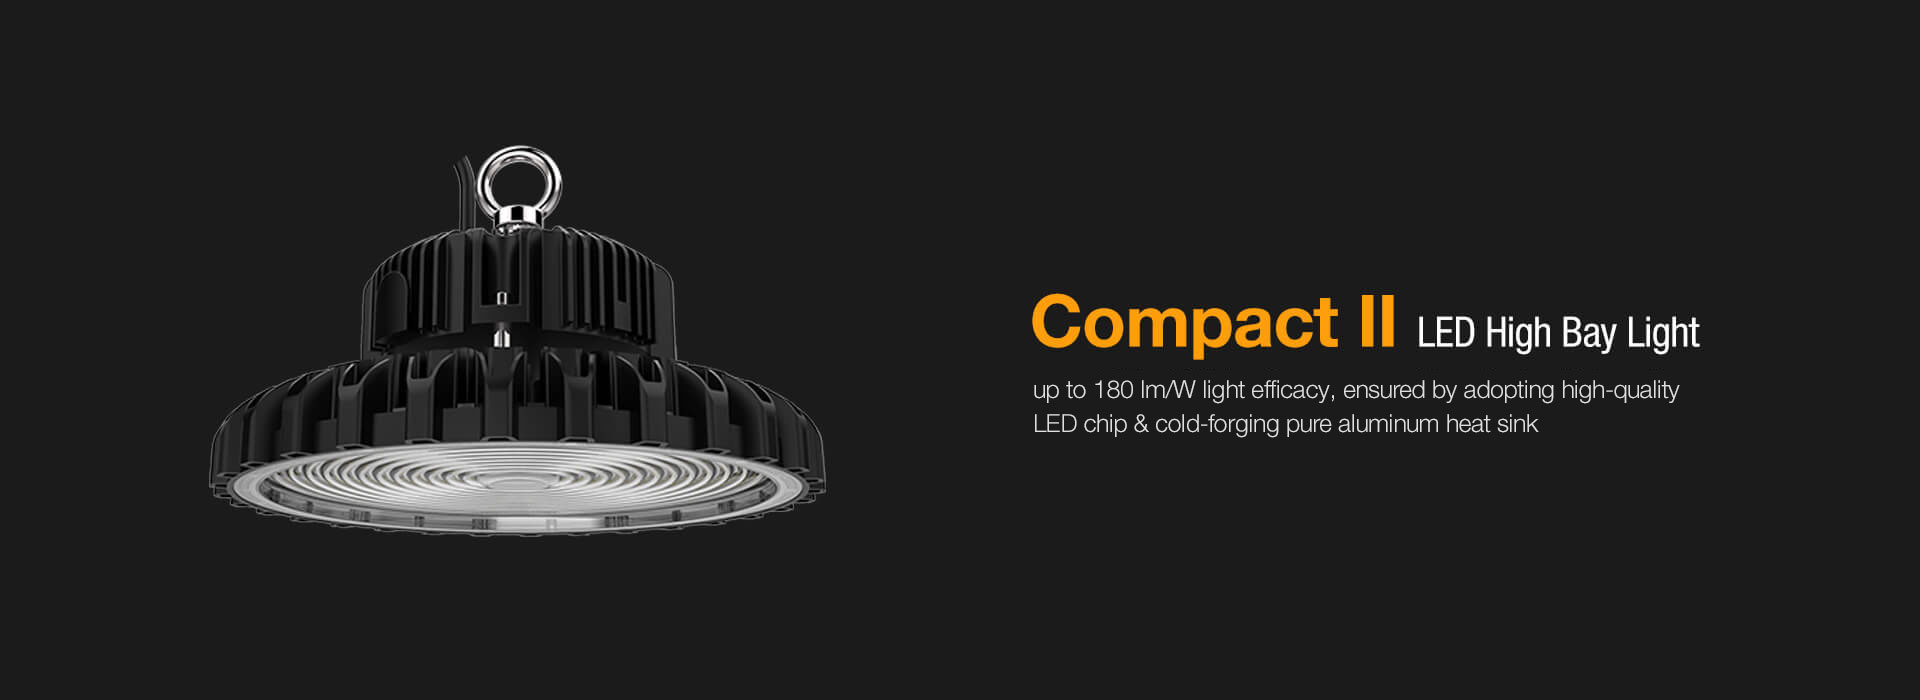 Compact II LED High Bay Light